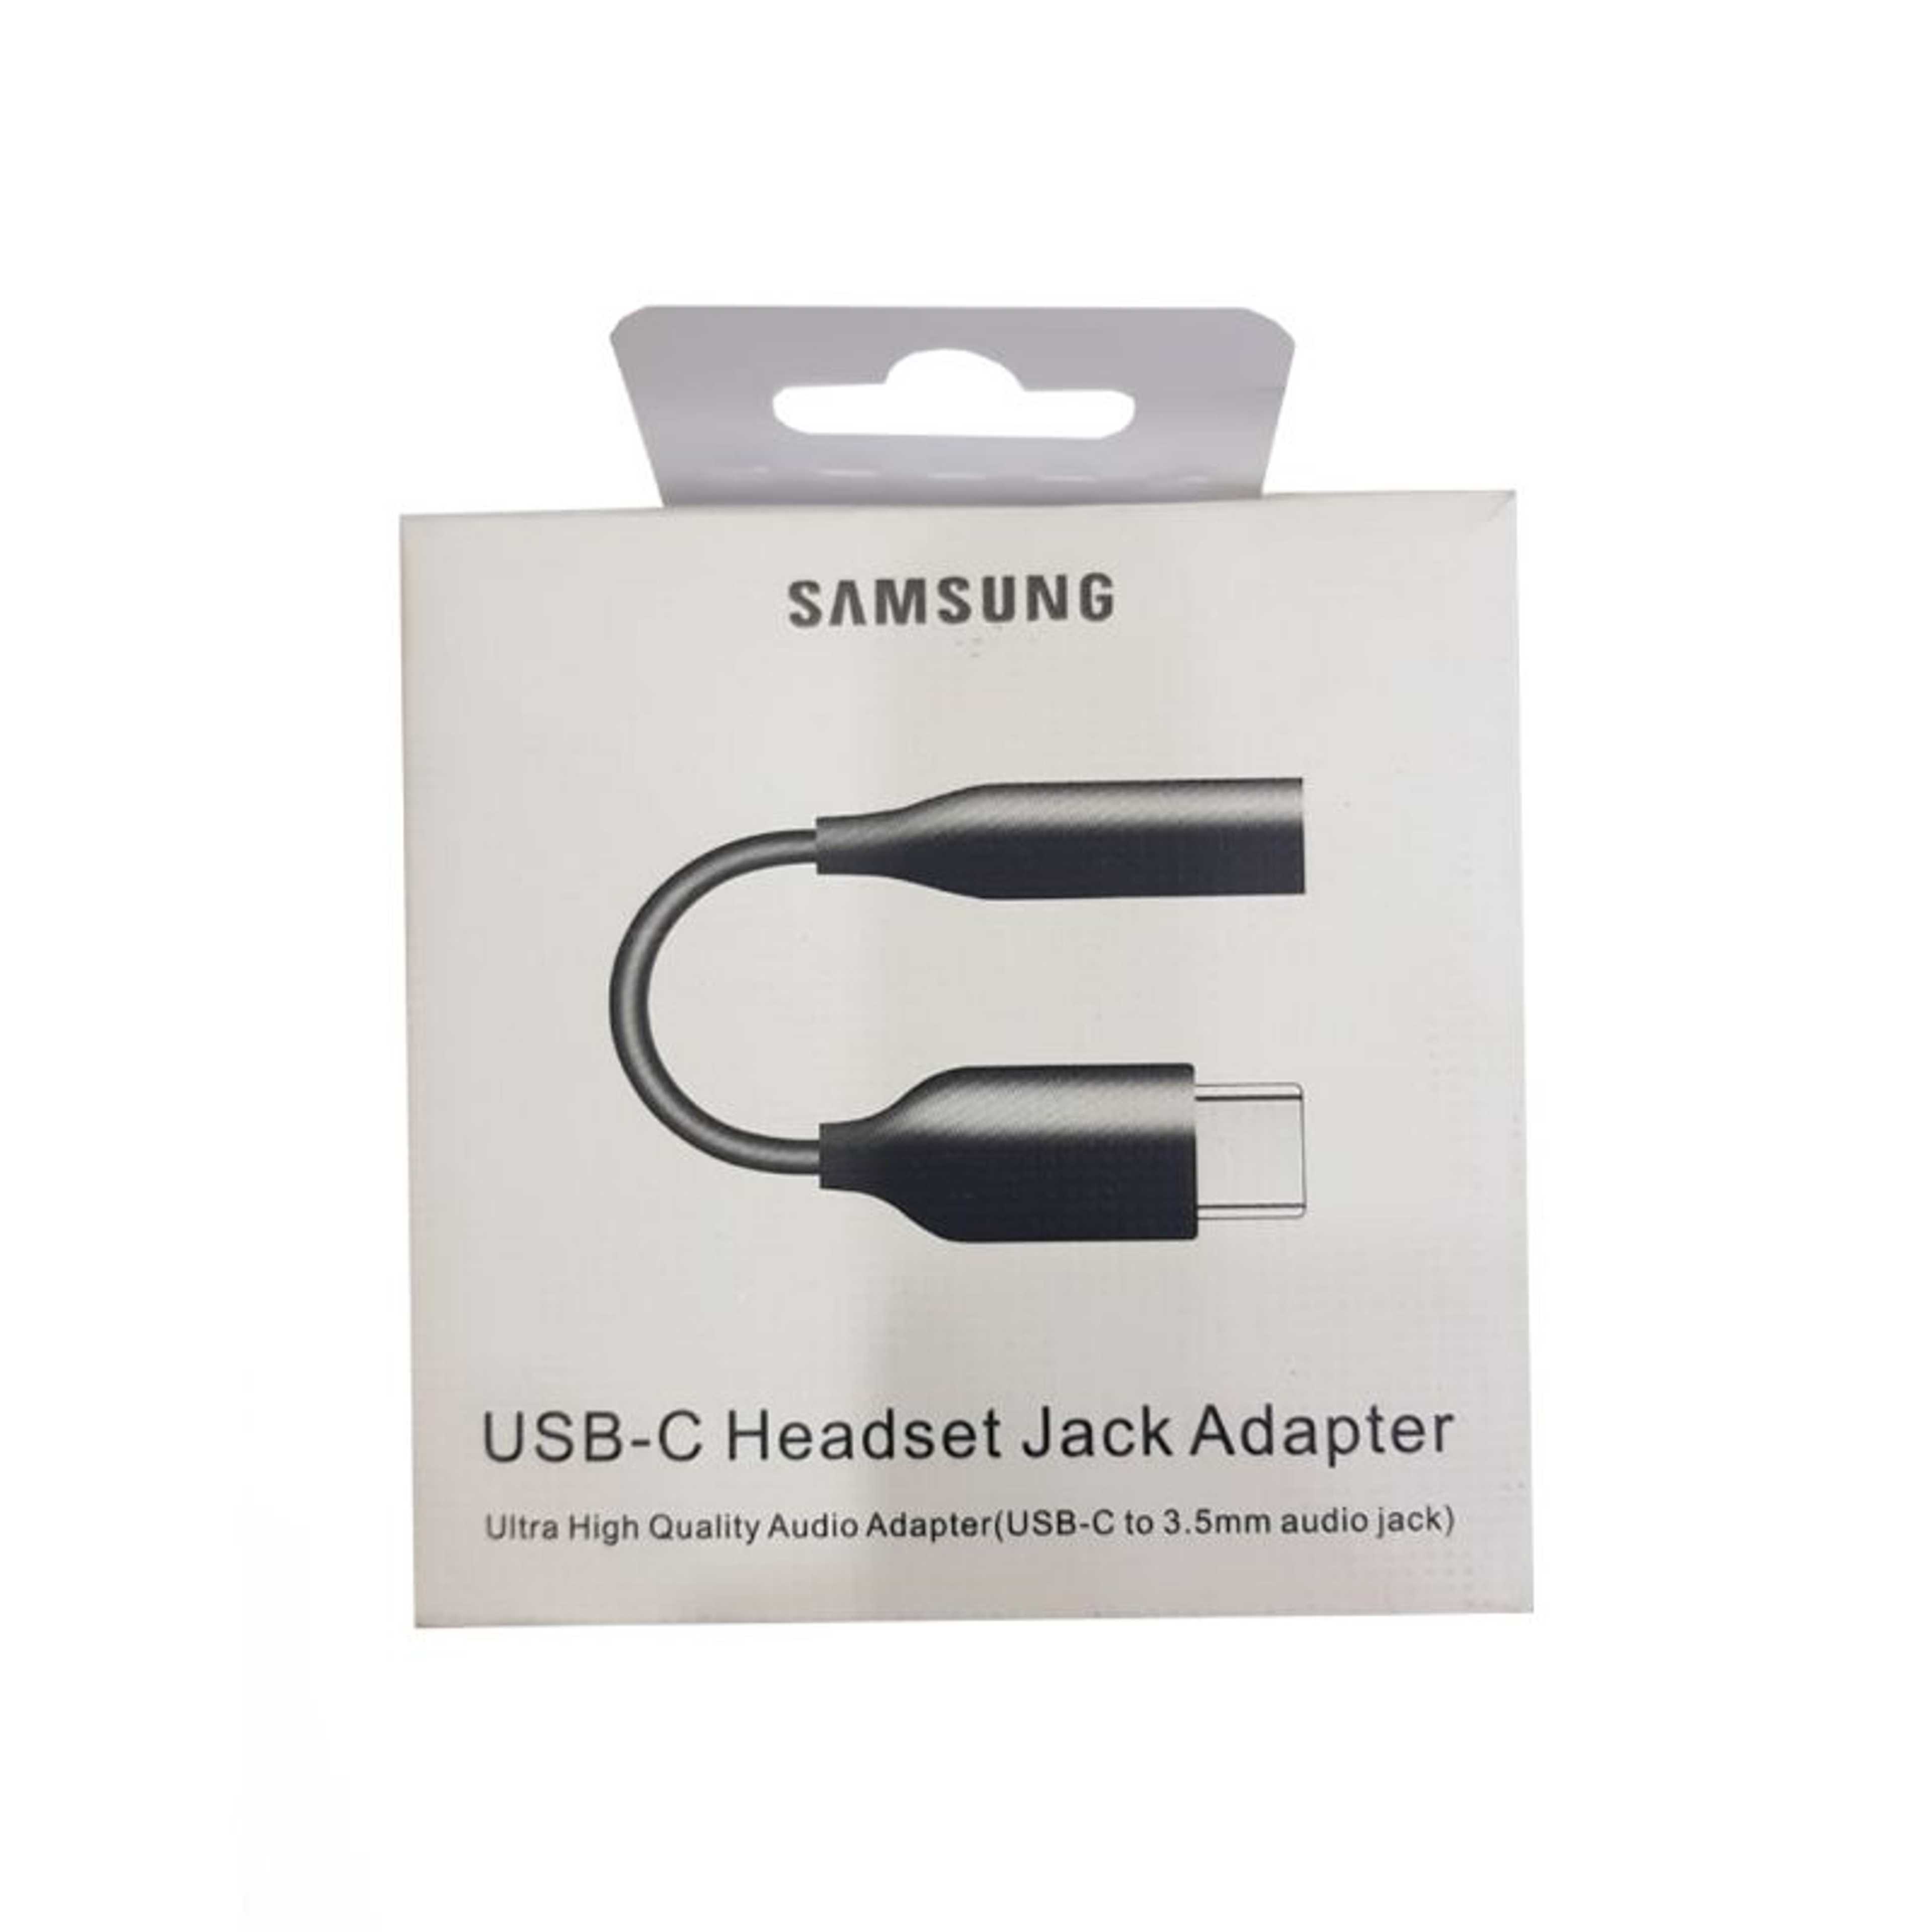 Samsung USB-C to 3.5mm Audio Jack Headset Jack Adapter